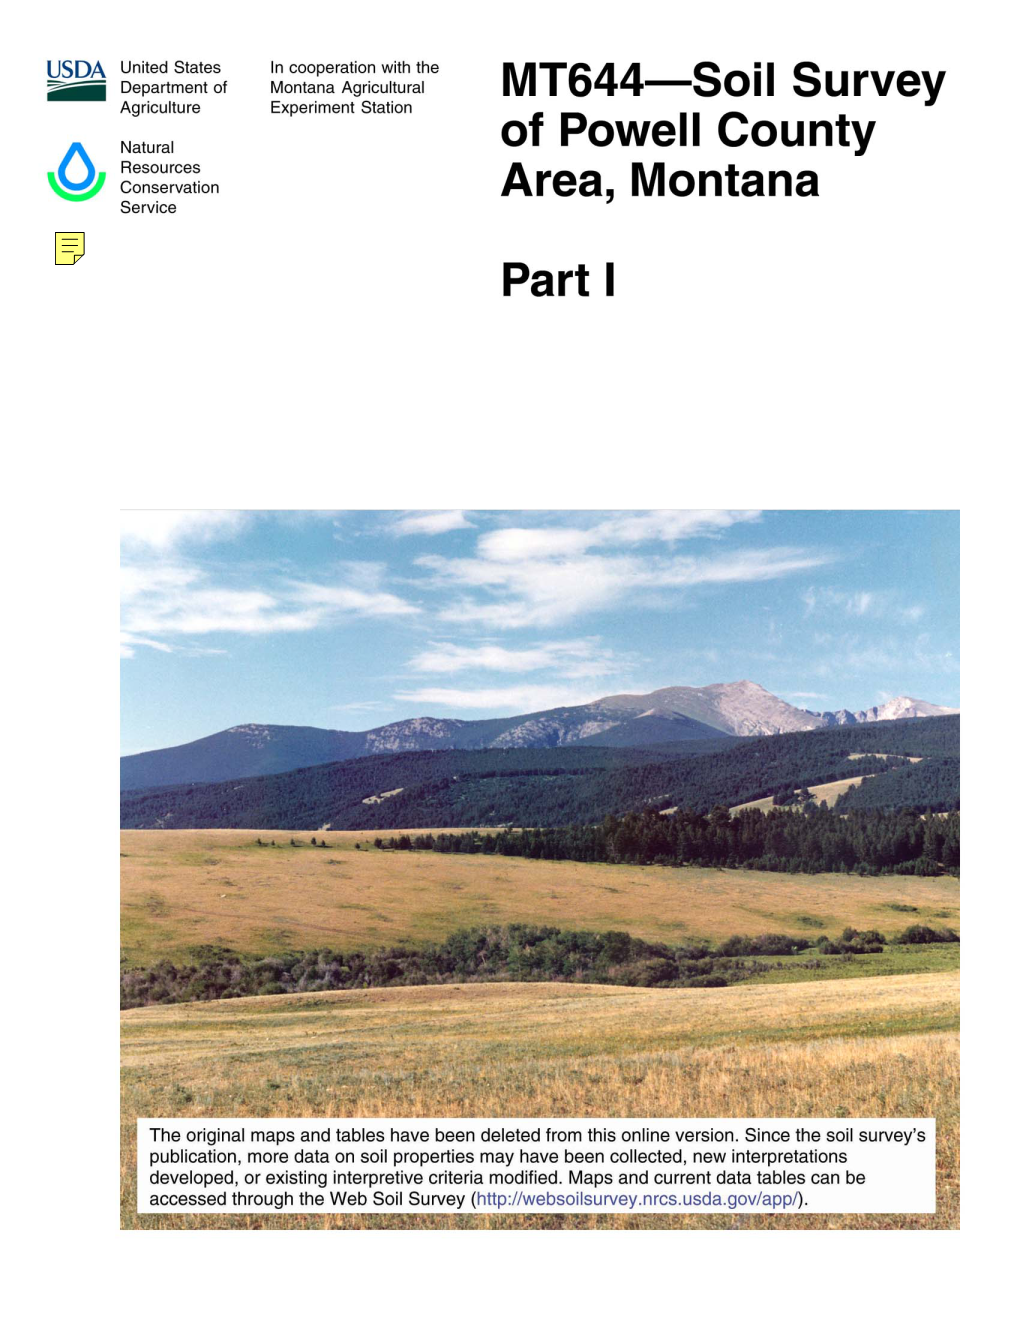 Soil Survey of Powell County Area, Montana